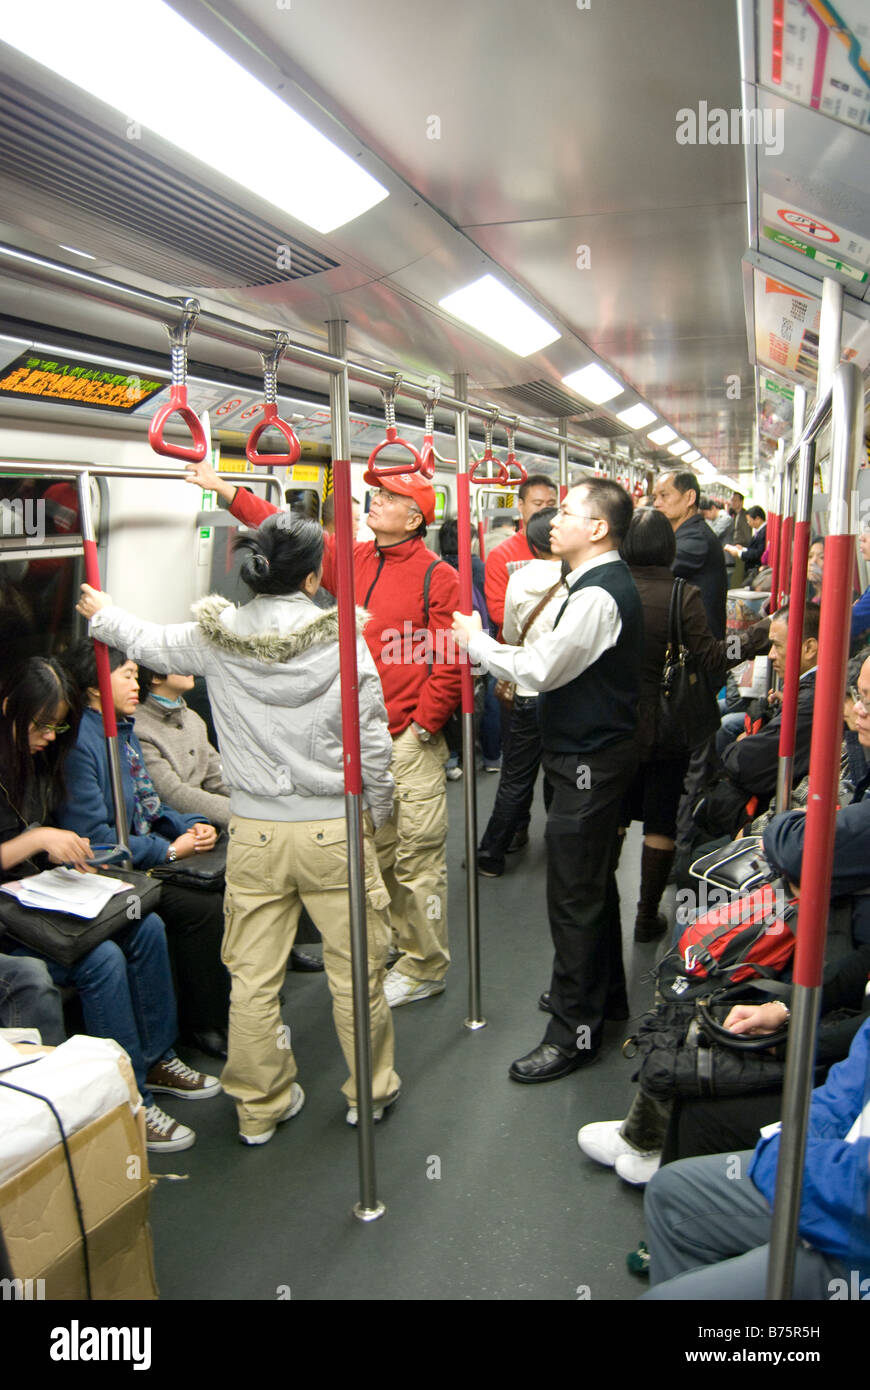 Crowded carriage, MTR Underground Railway, Tsim Sha Tsui, Kowloon Peninsula, Hong Kong, People's Republic of China Stock Photo